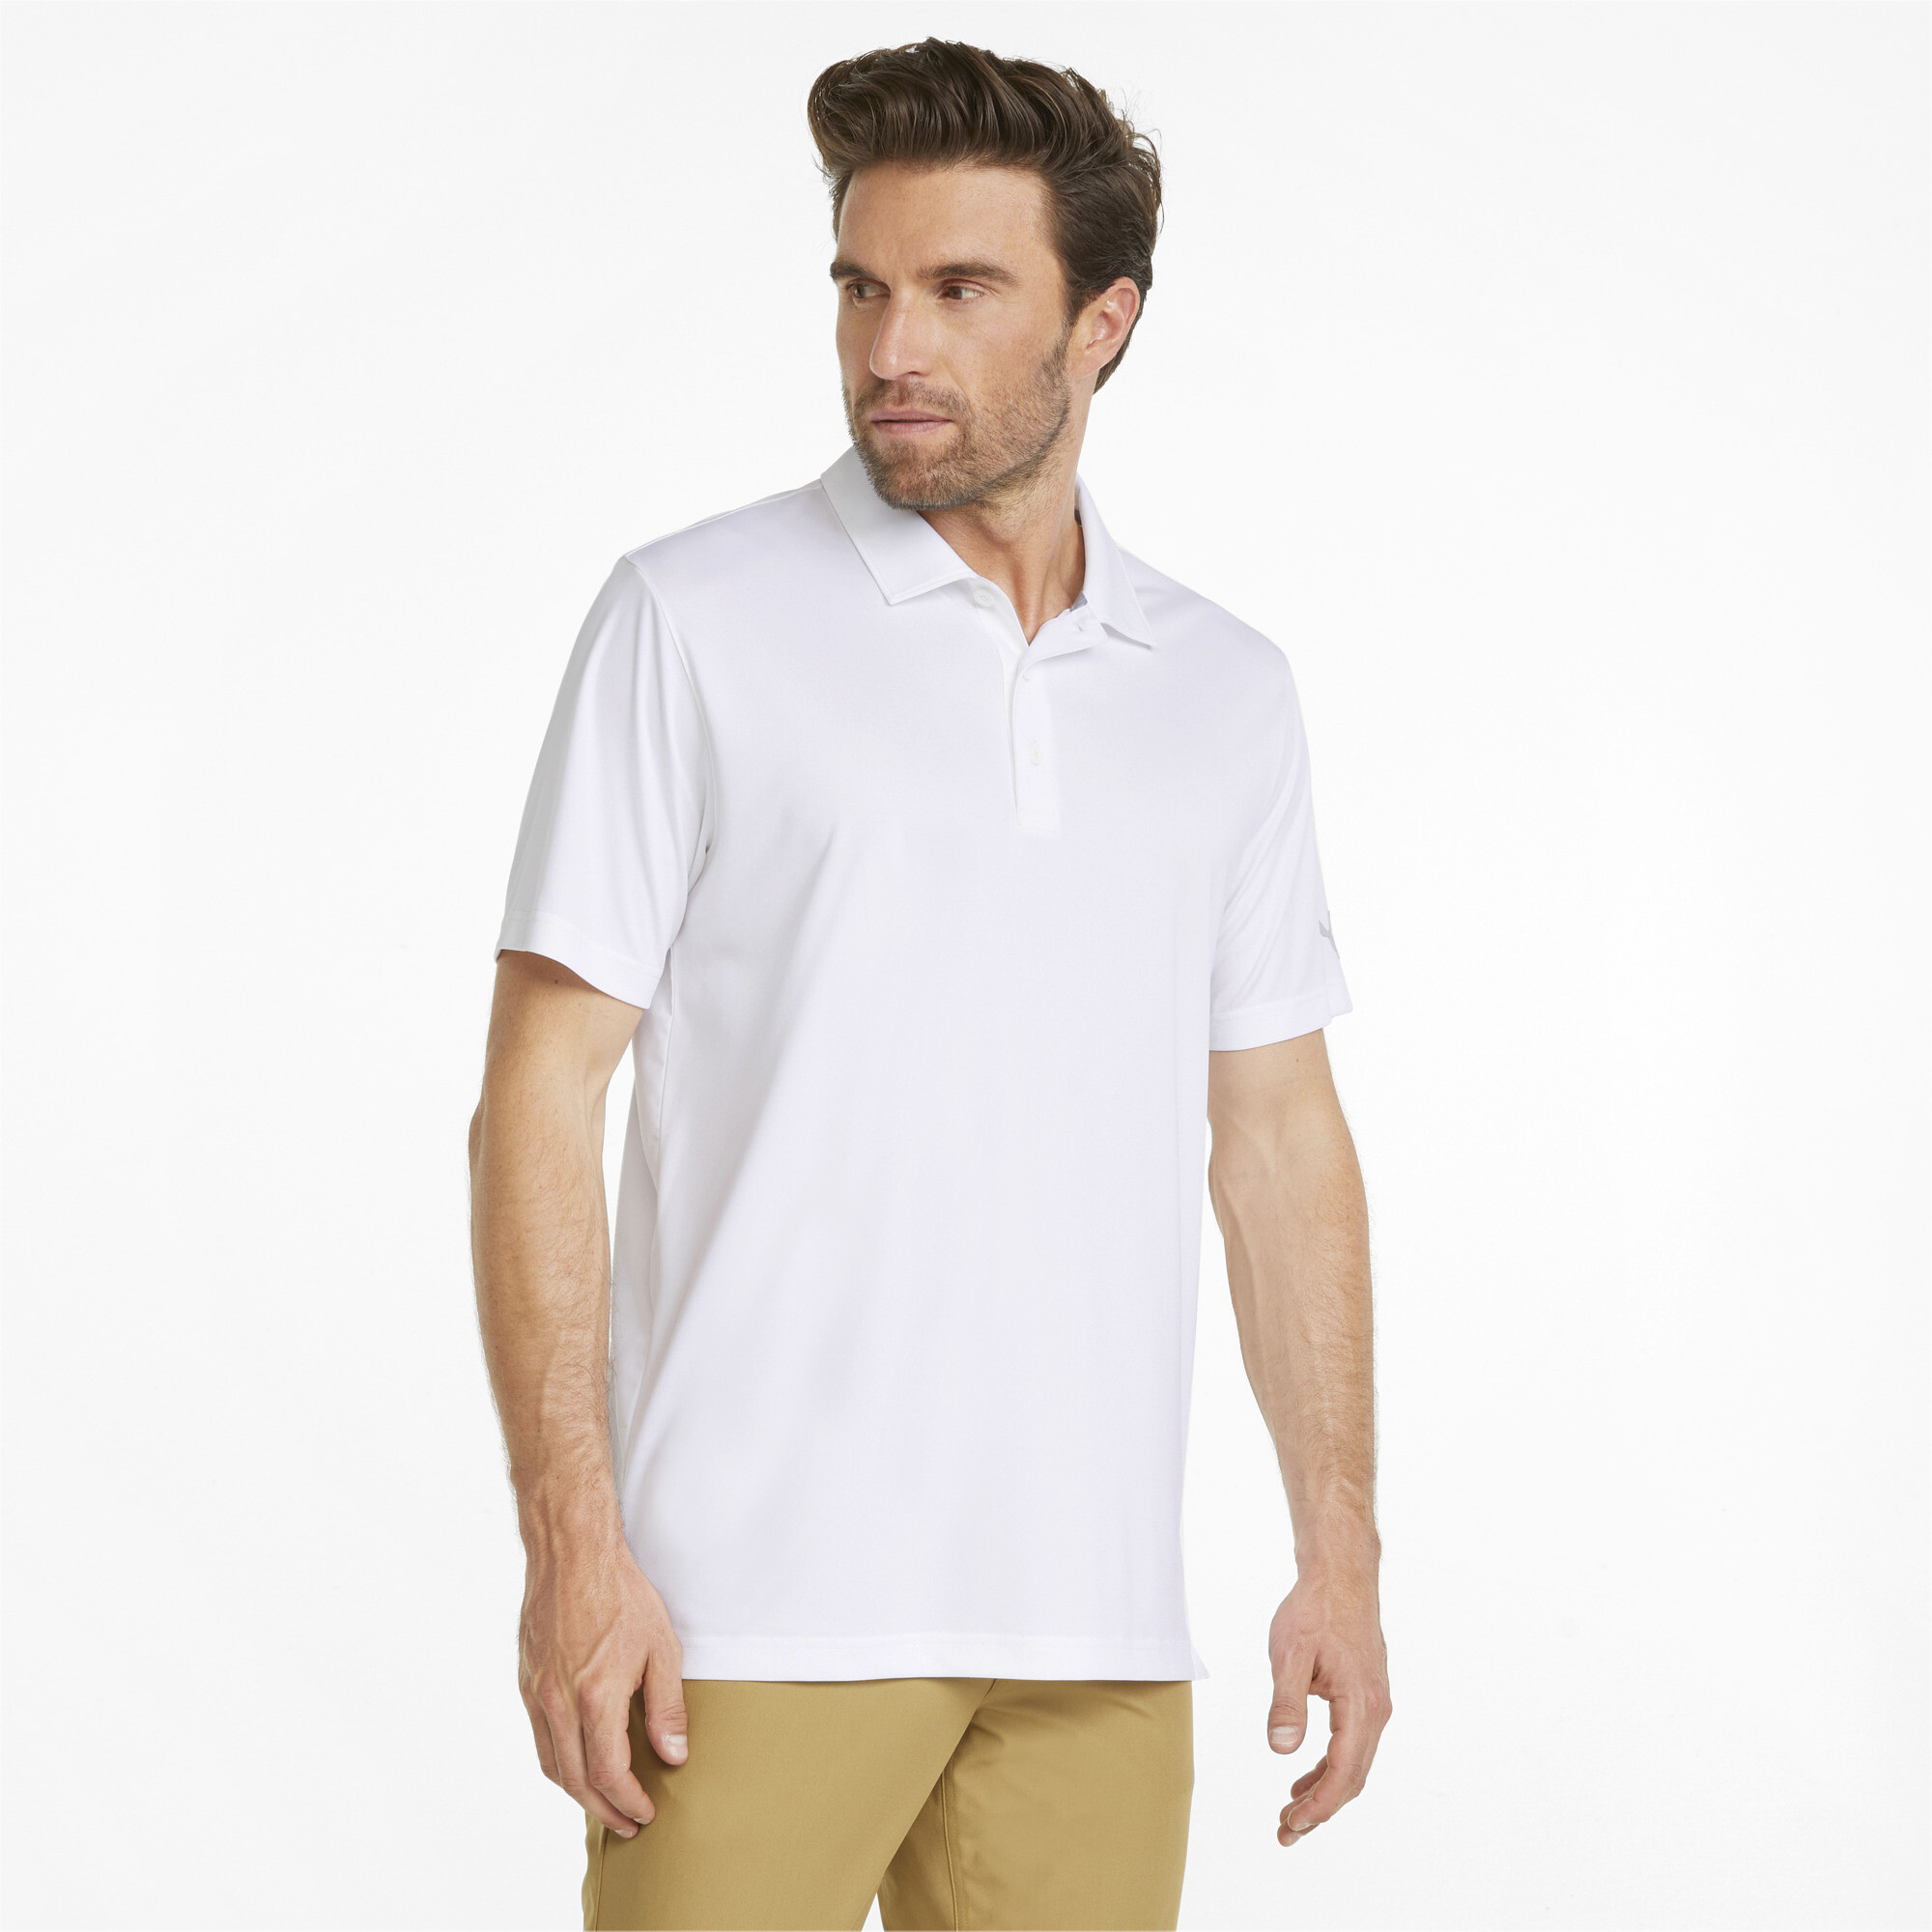 Men's Puma Gamer's Golf Polo Shirt T-Shirt, White T-Shirt, Size XL T-Shirt, Clothing